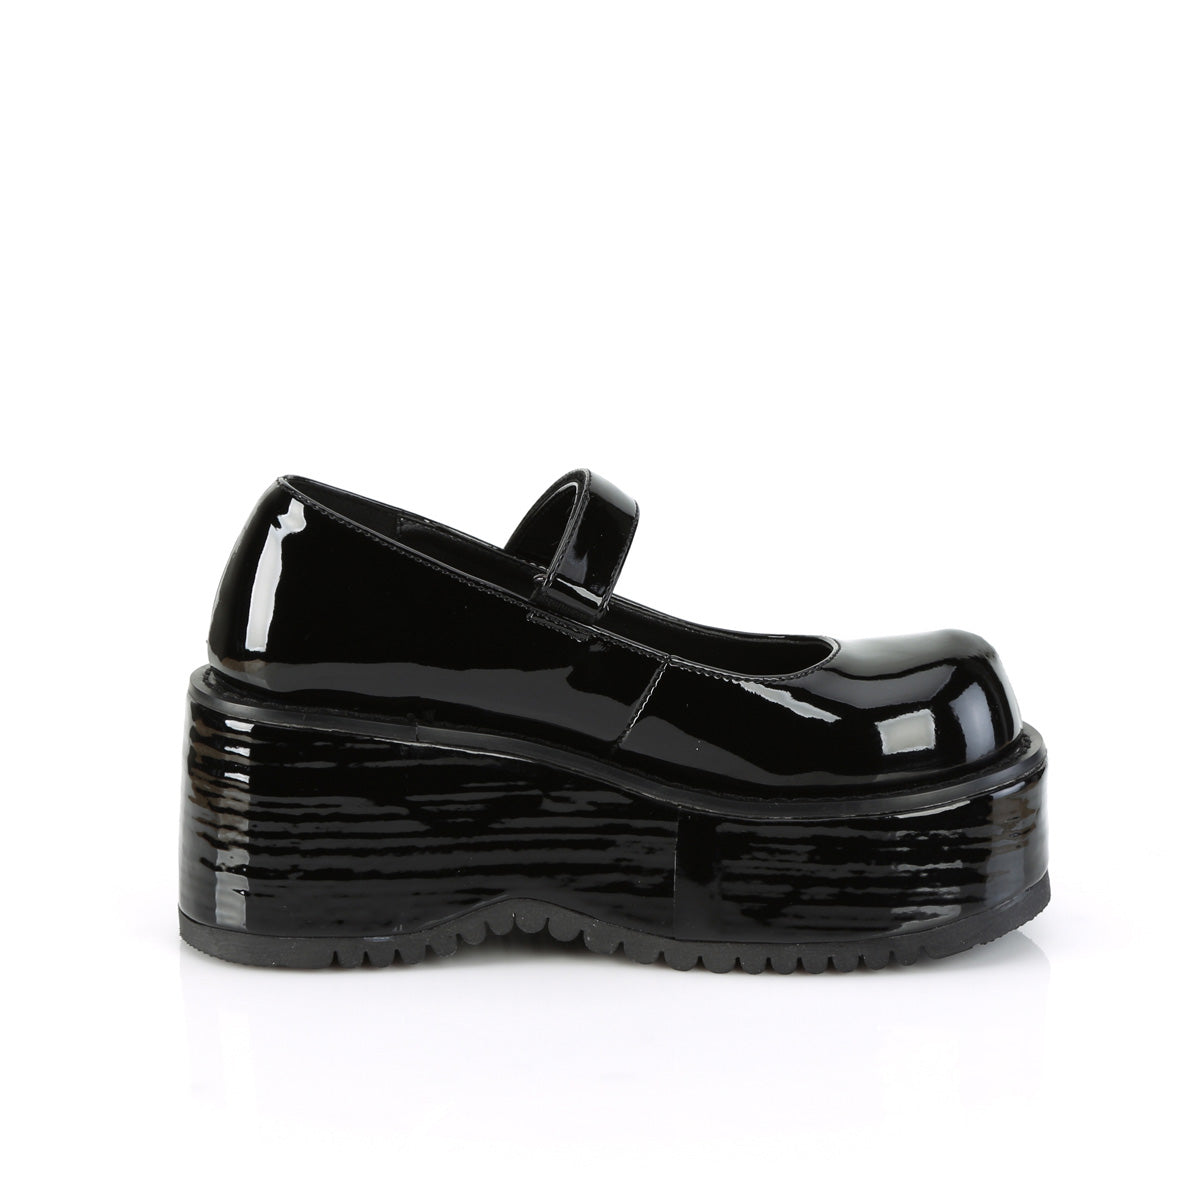 DOLLIE-01 Demonia Black Patentent Women's Heels & Platform Shoes [Demonia Cult Alternative Footwear]